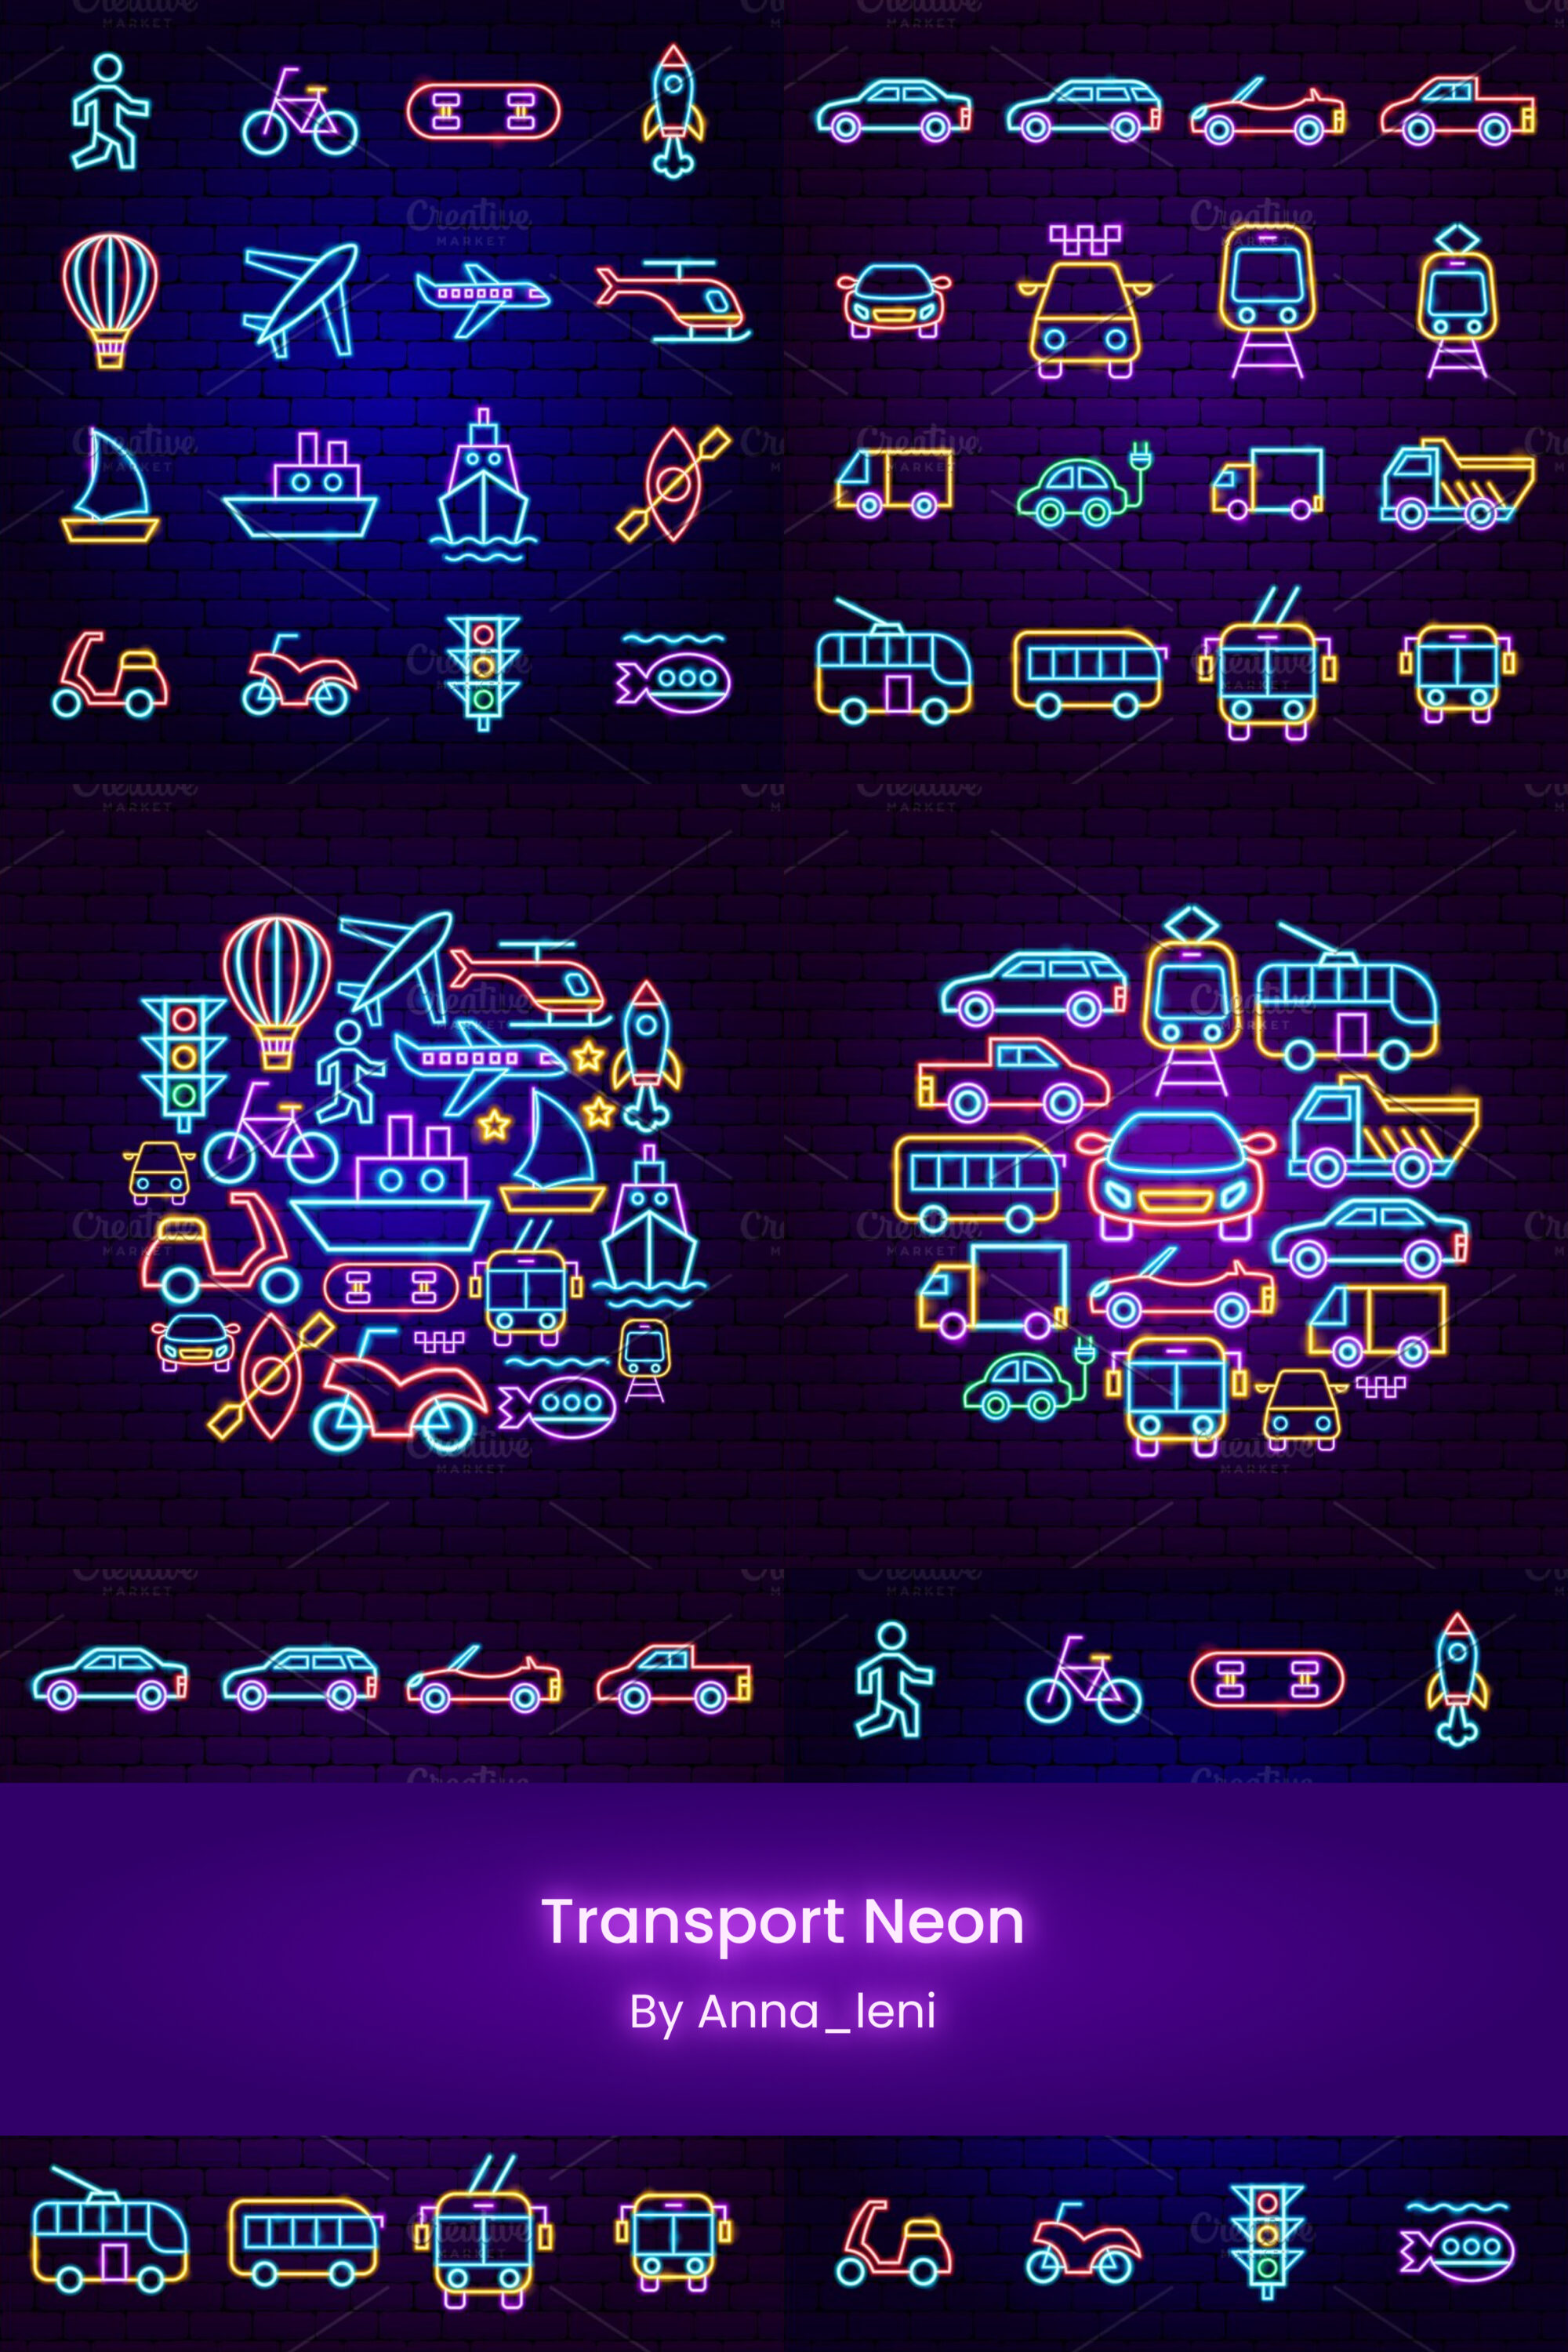 Transport neon of pinterest.